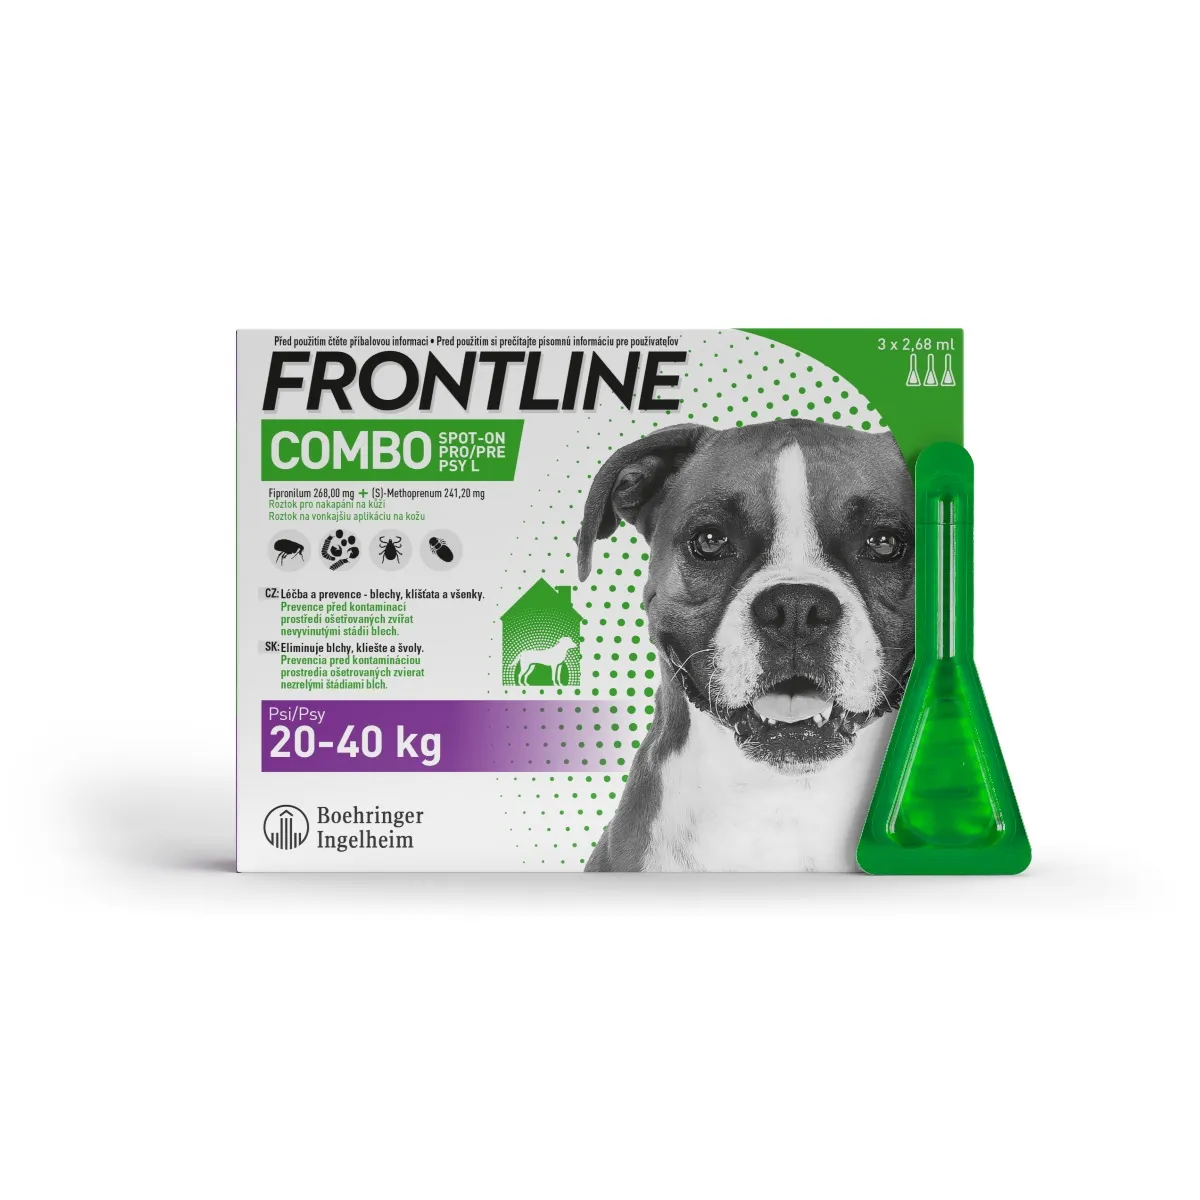 FRONTLINE COMBO spot-on pro DOG L   3 x 2,68 ml